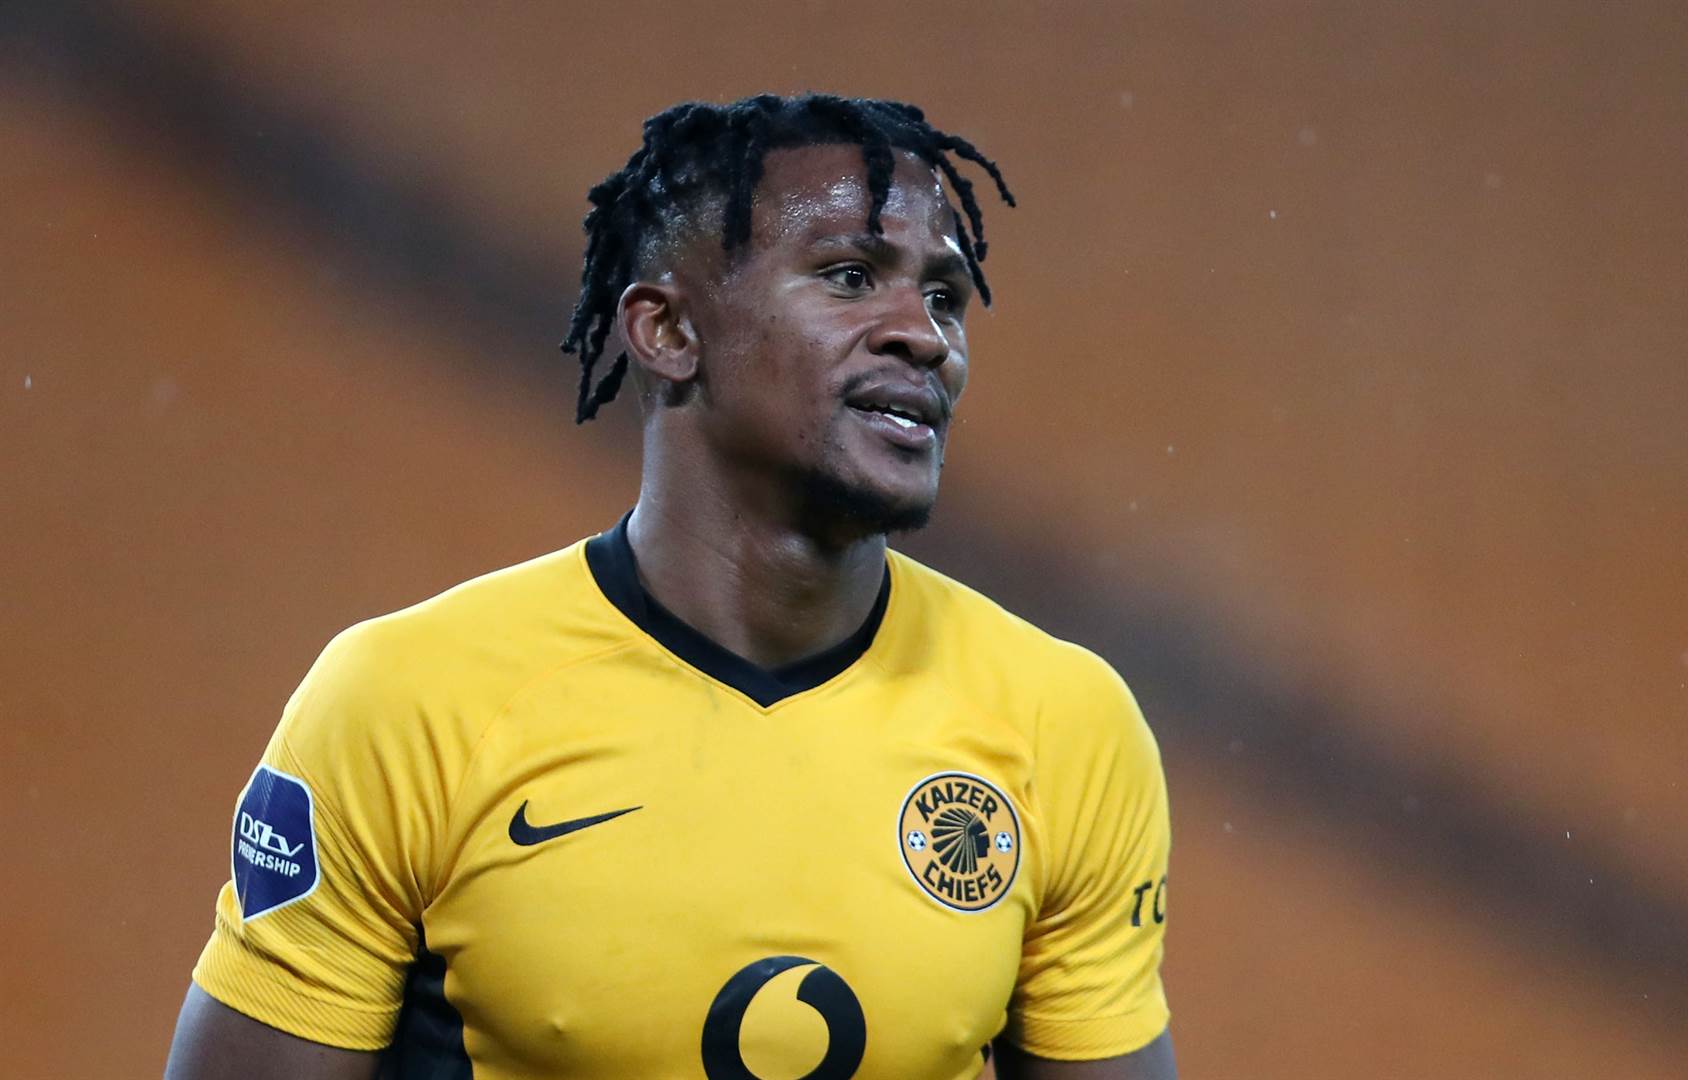 DEF: Siyabonga Ngezana – 1163 minutes played